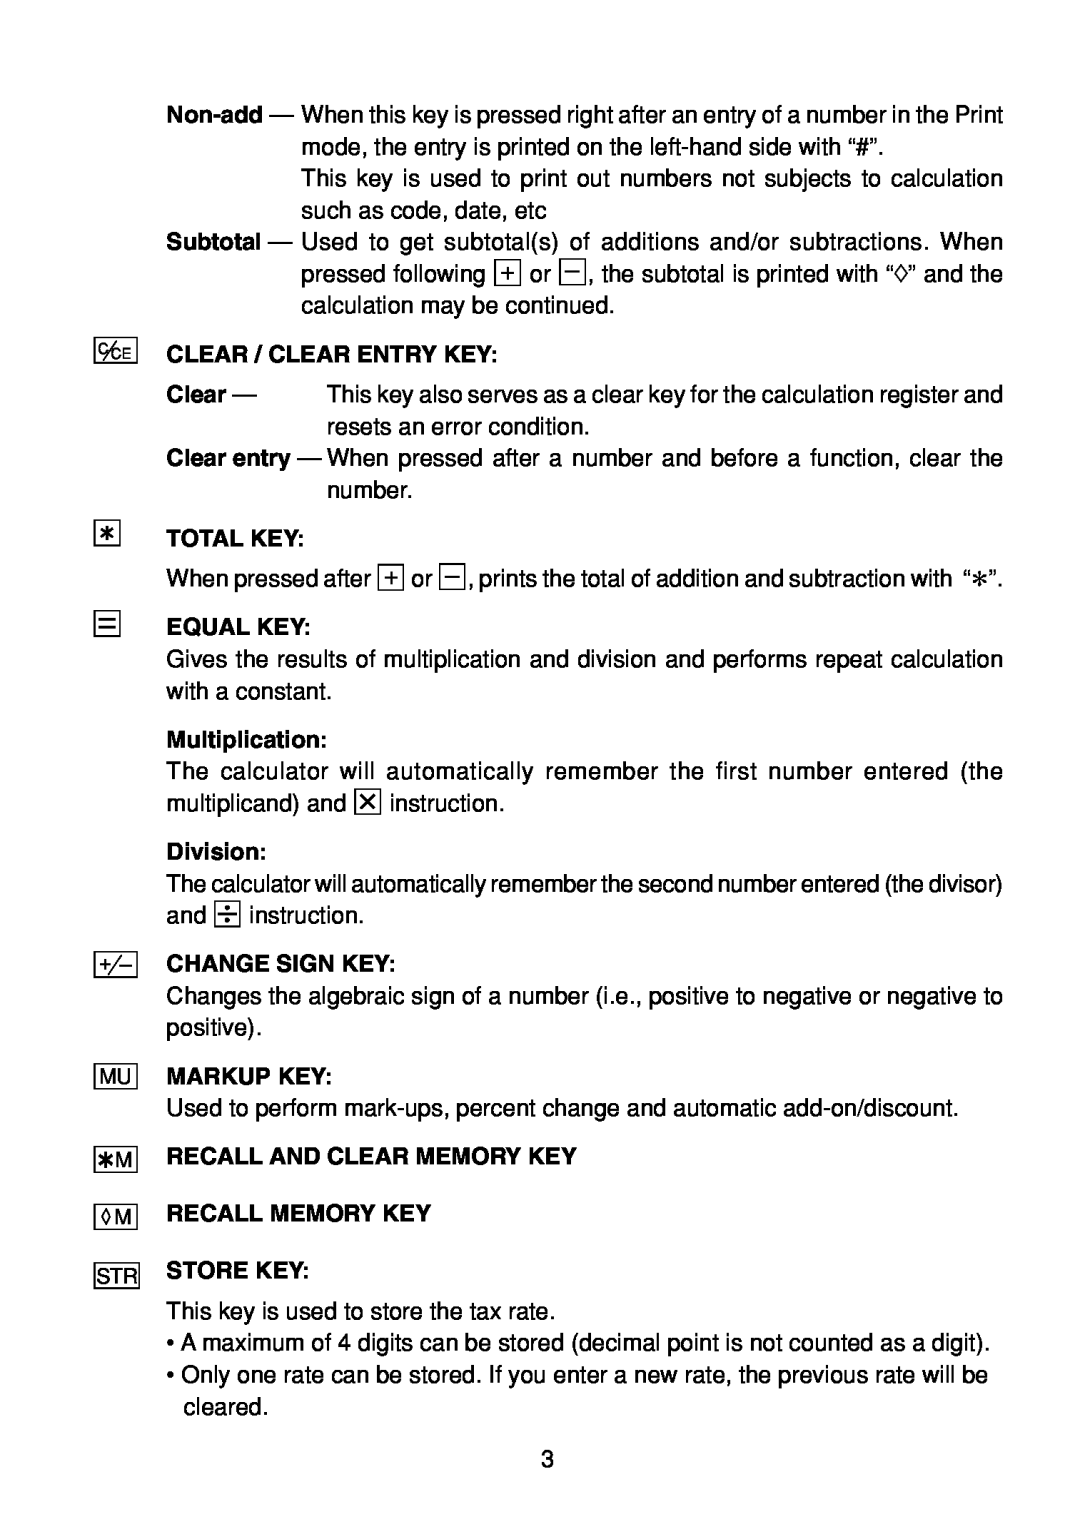 Sharp EL-1801C Clear / Clear Entry Key, Total Key, Equal Key, Multiplication, Division, Change Sign Key, Markup Key 